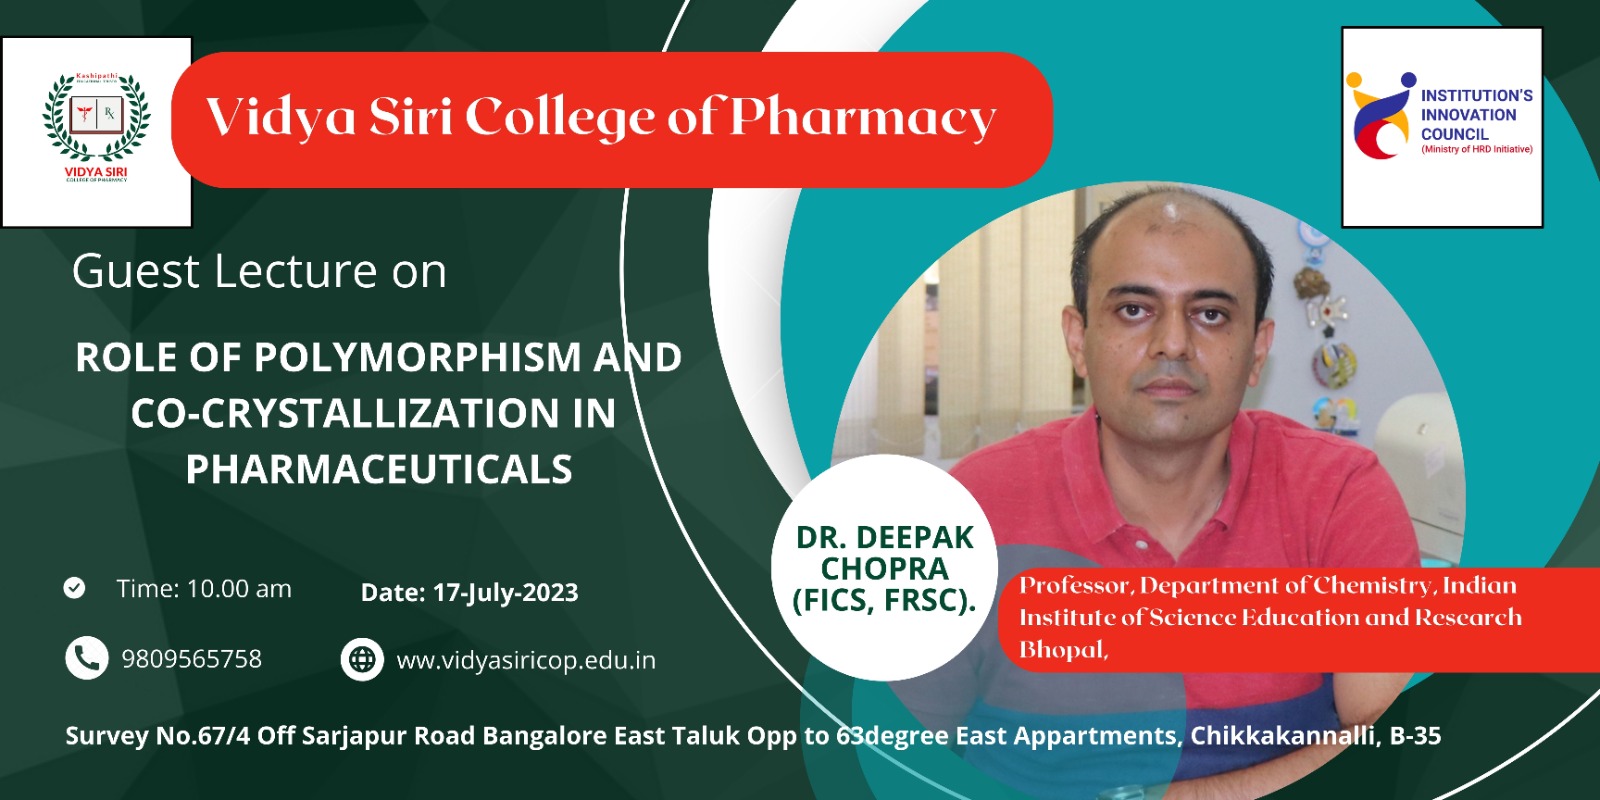 Inspiring Collaboration: Dr. Deepak Chopra and Vidya Siri College of Pharmacy